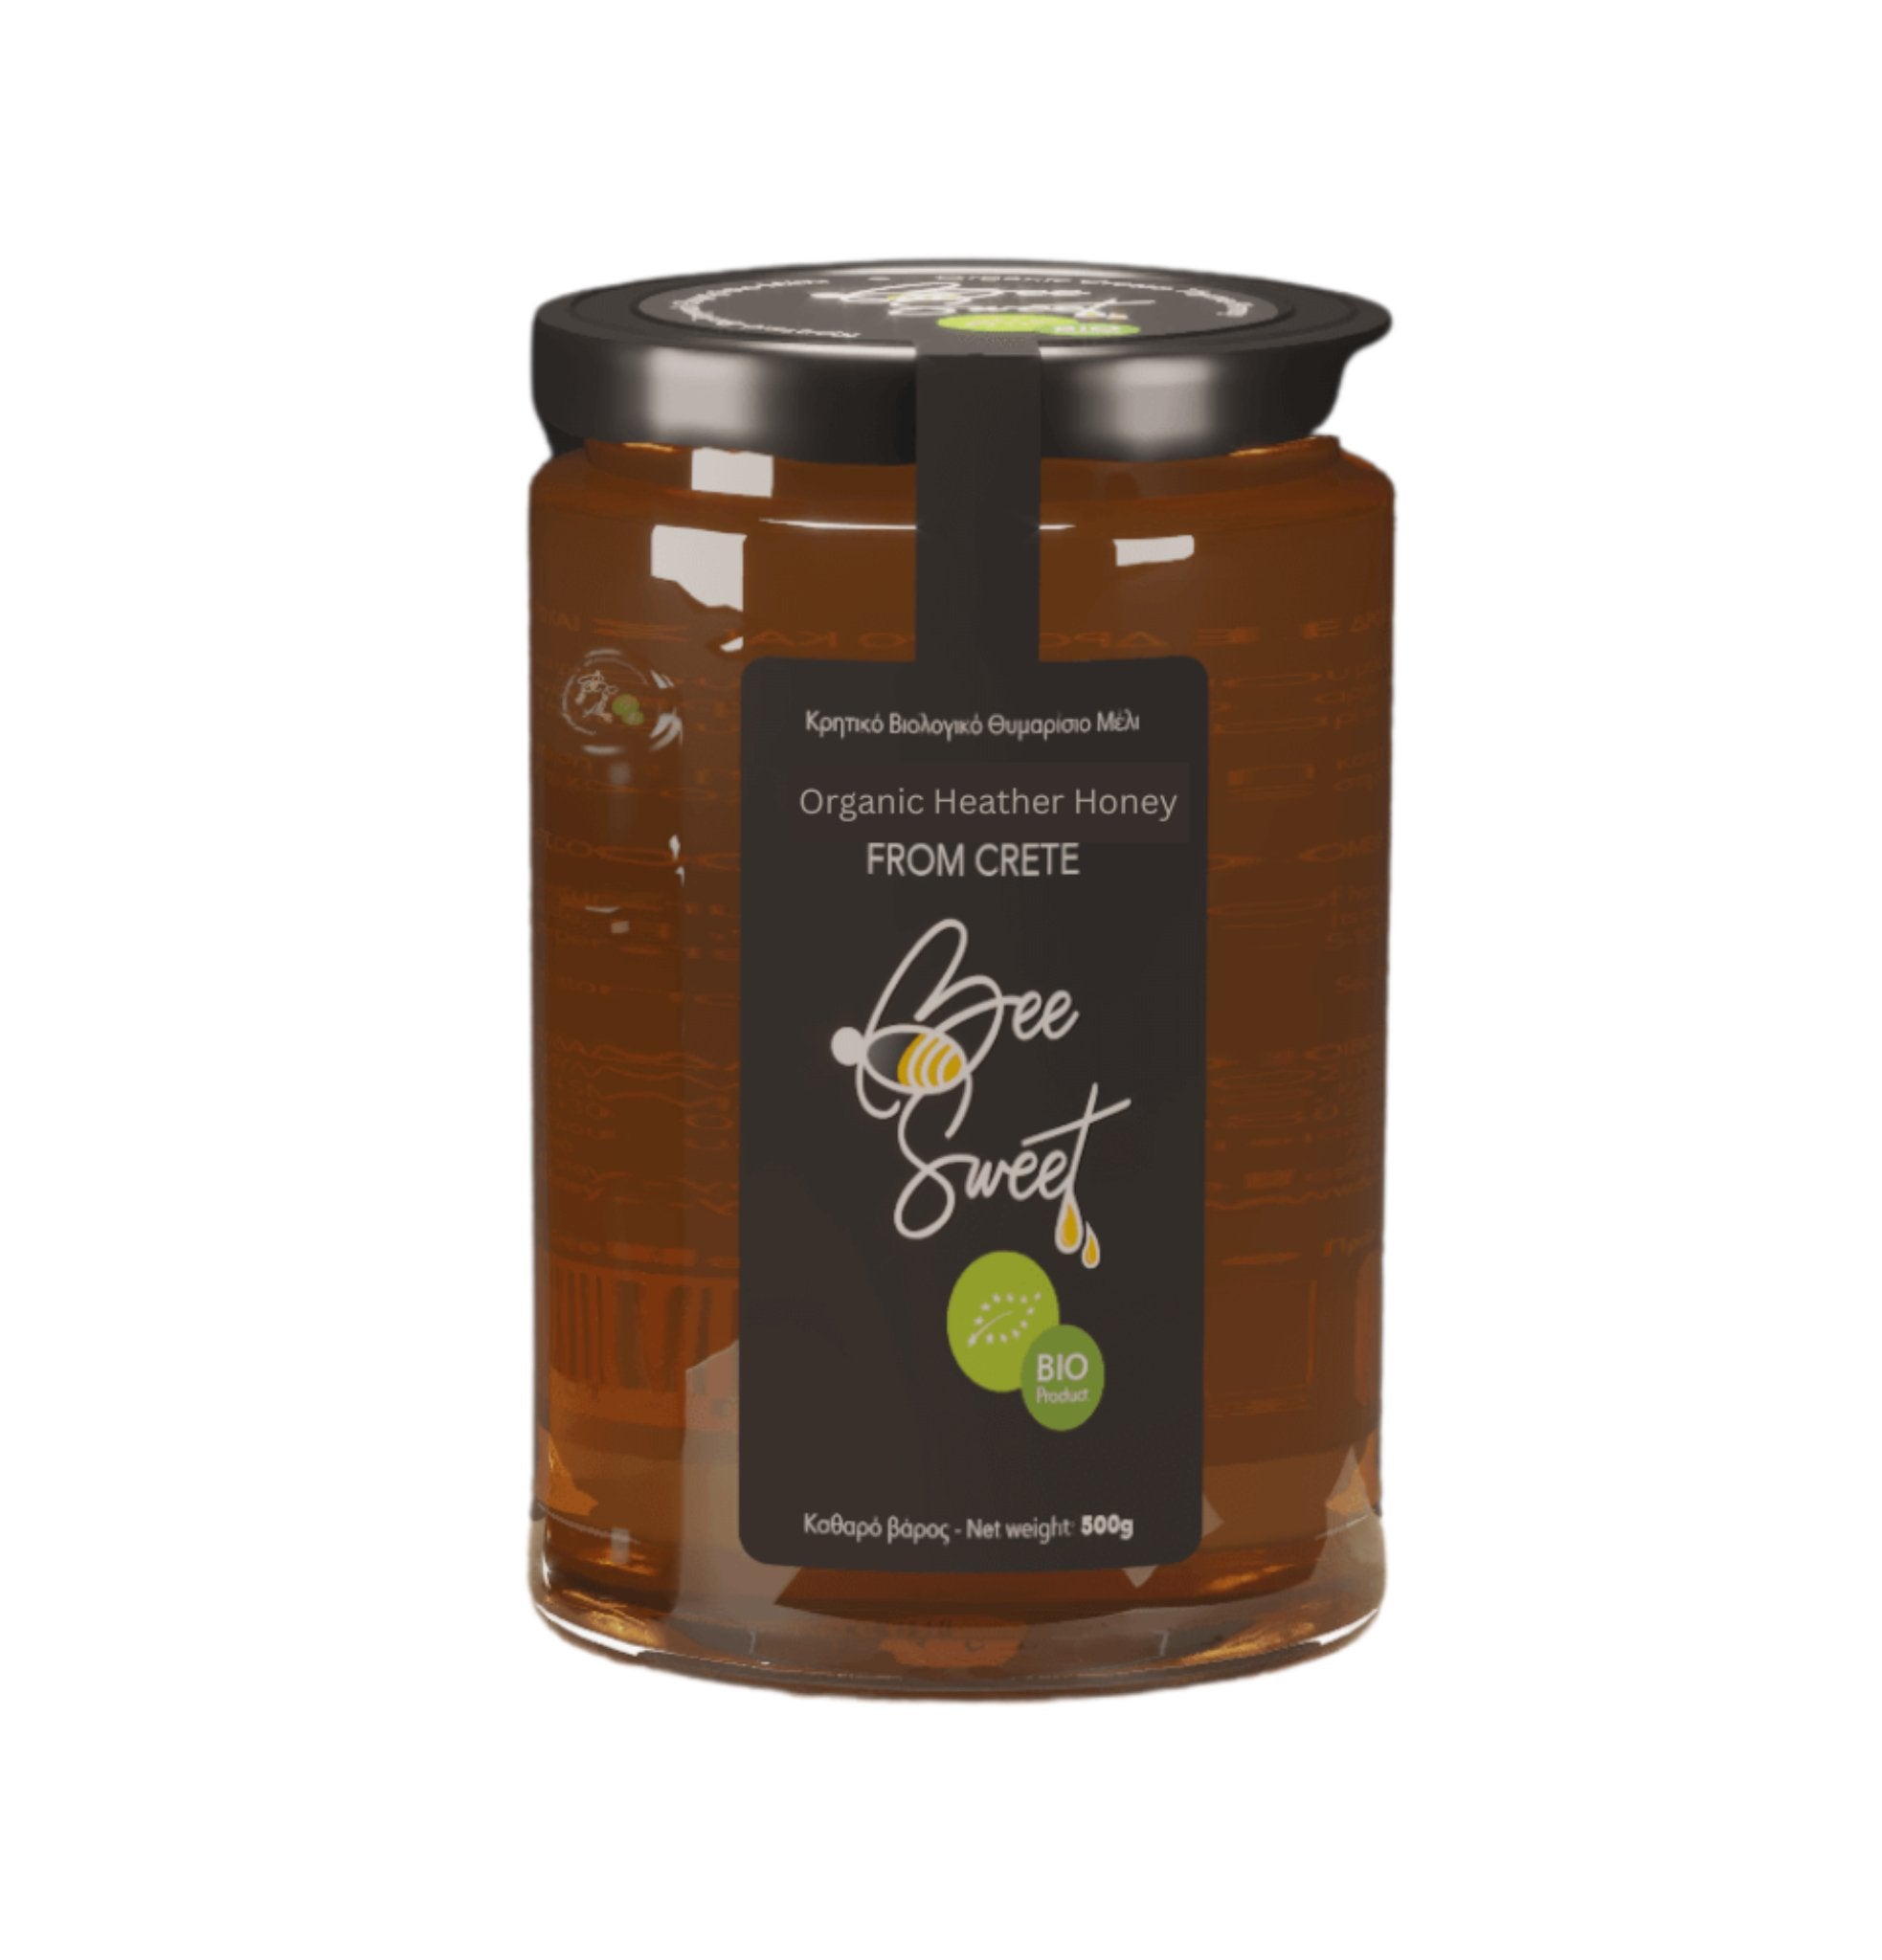 Organic Heather Honey - The Bio Foods